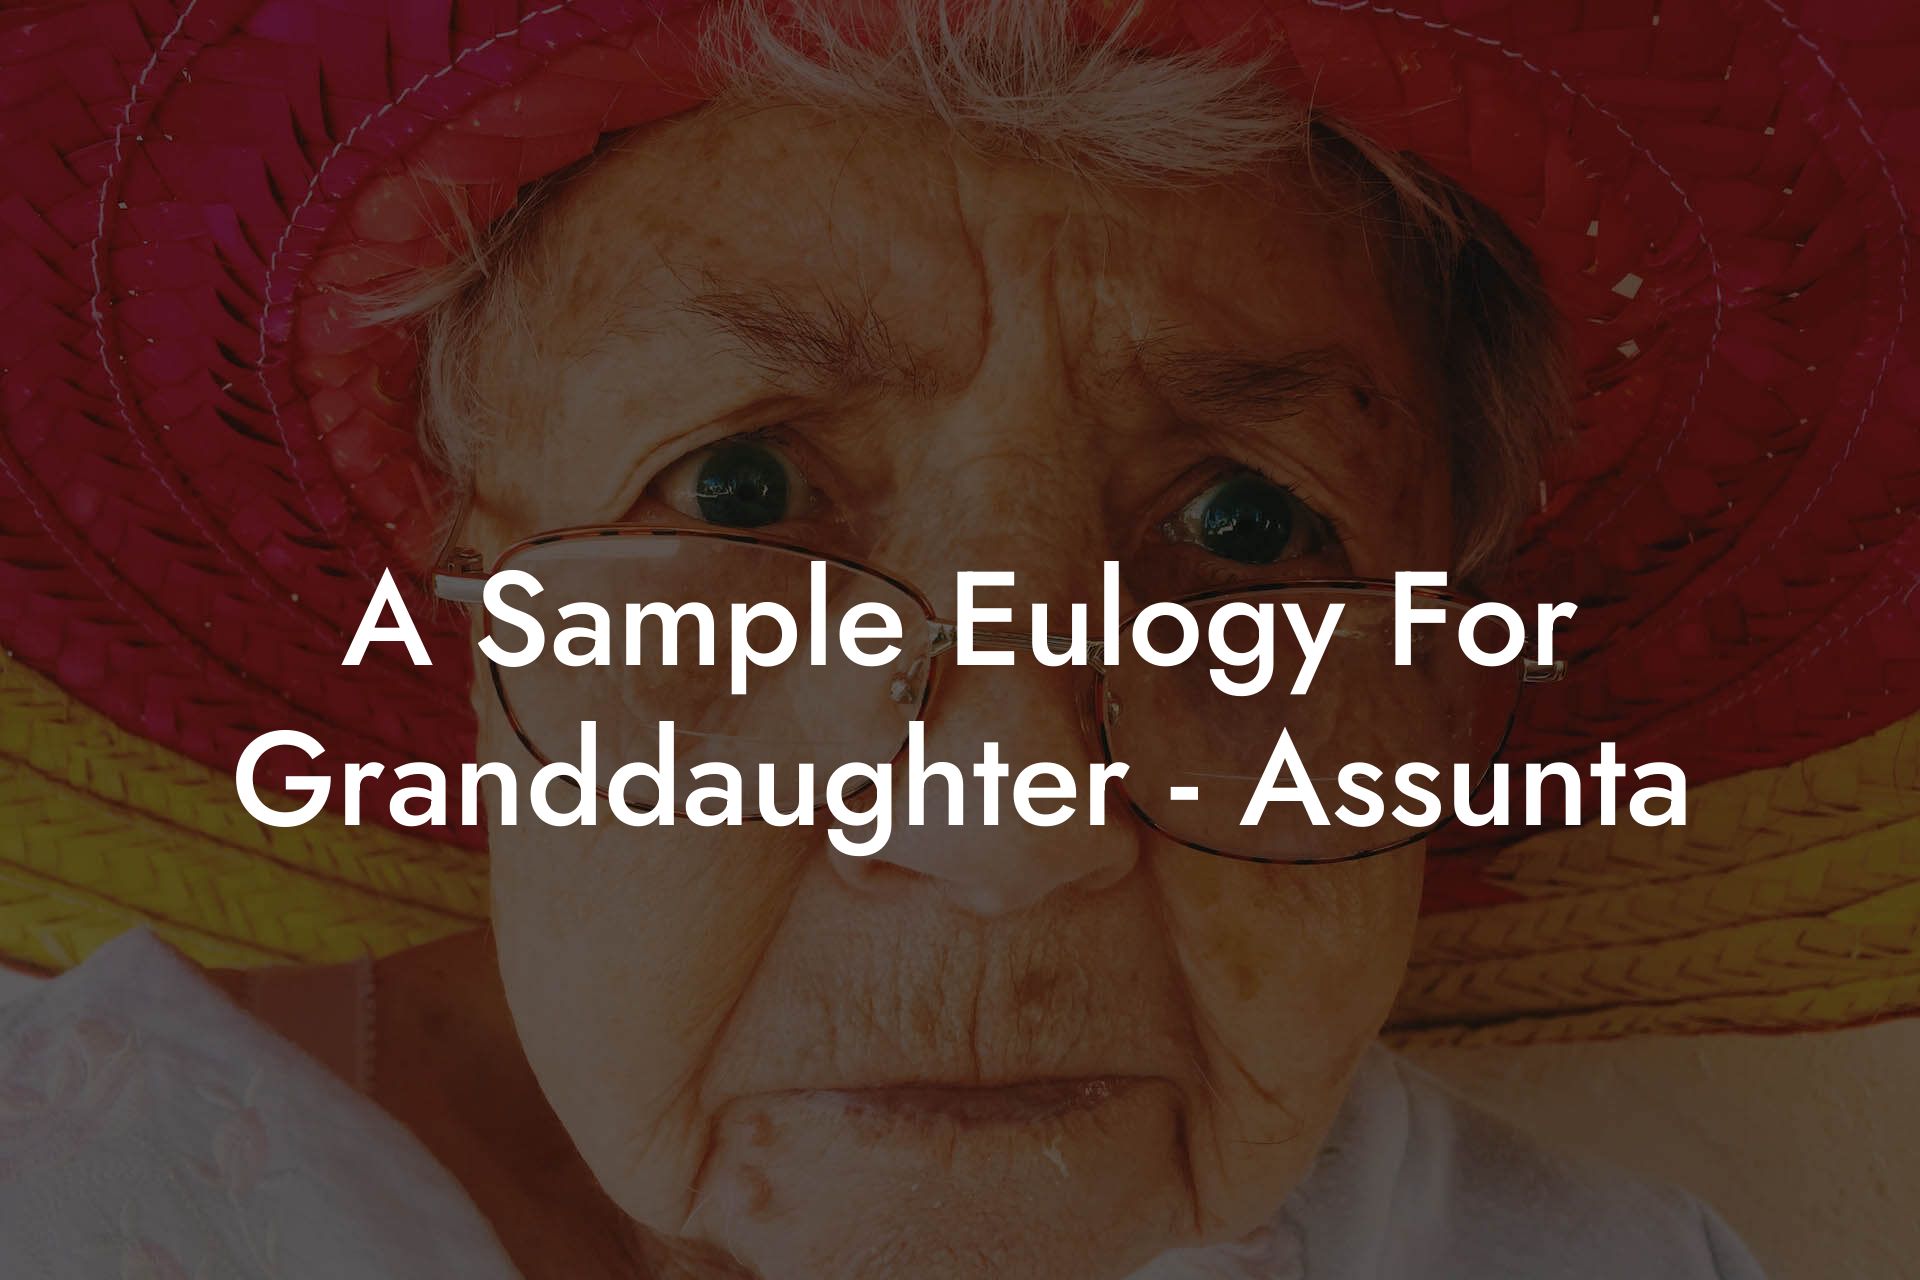 A Sample Eulogy For Granddaughter - Assunta